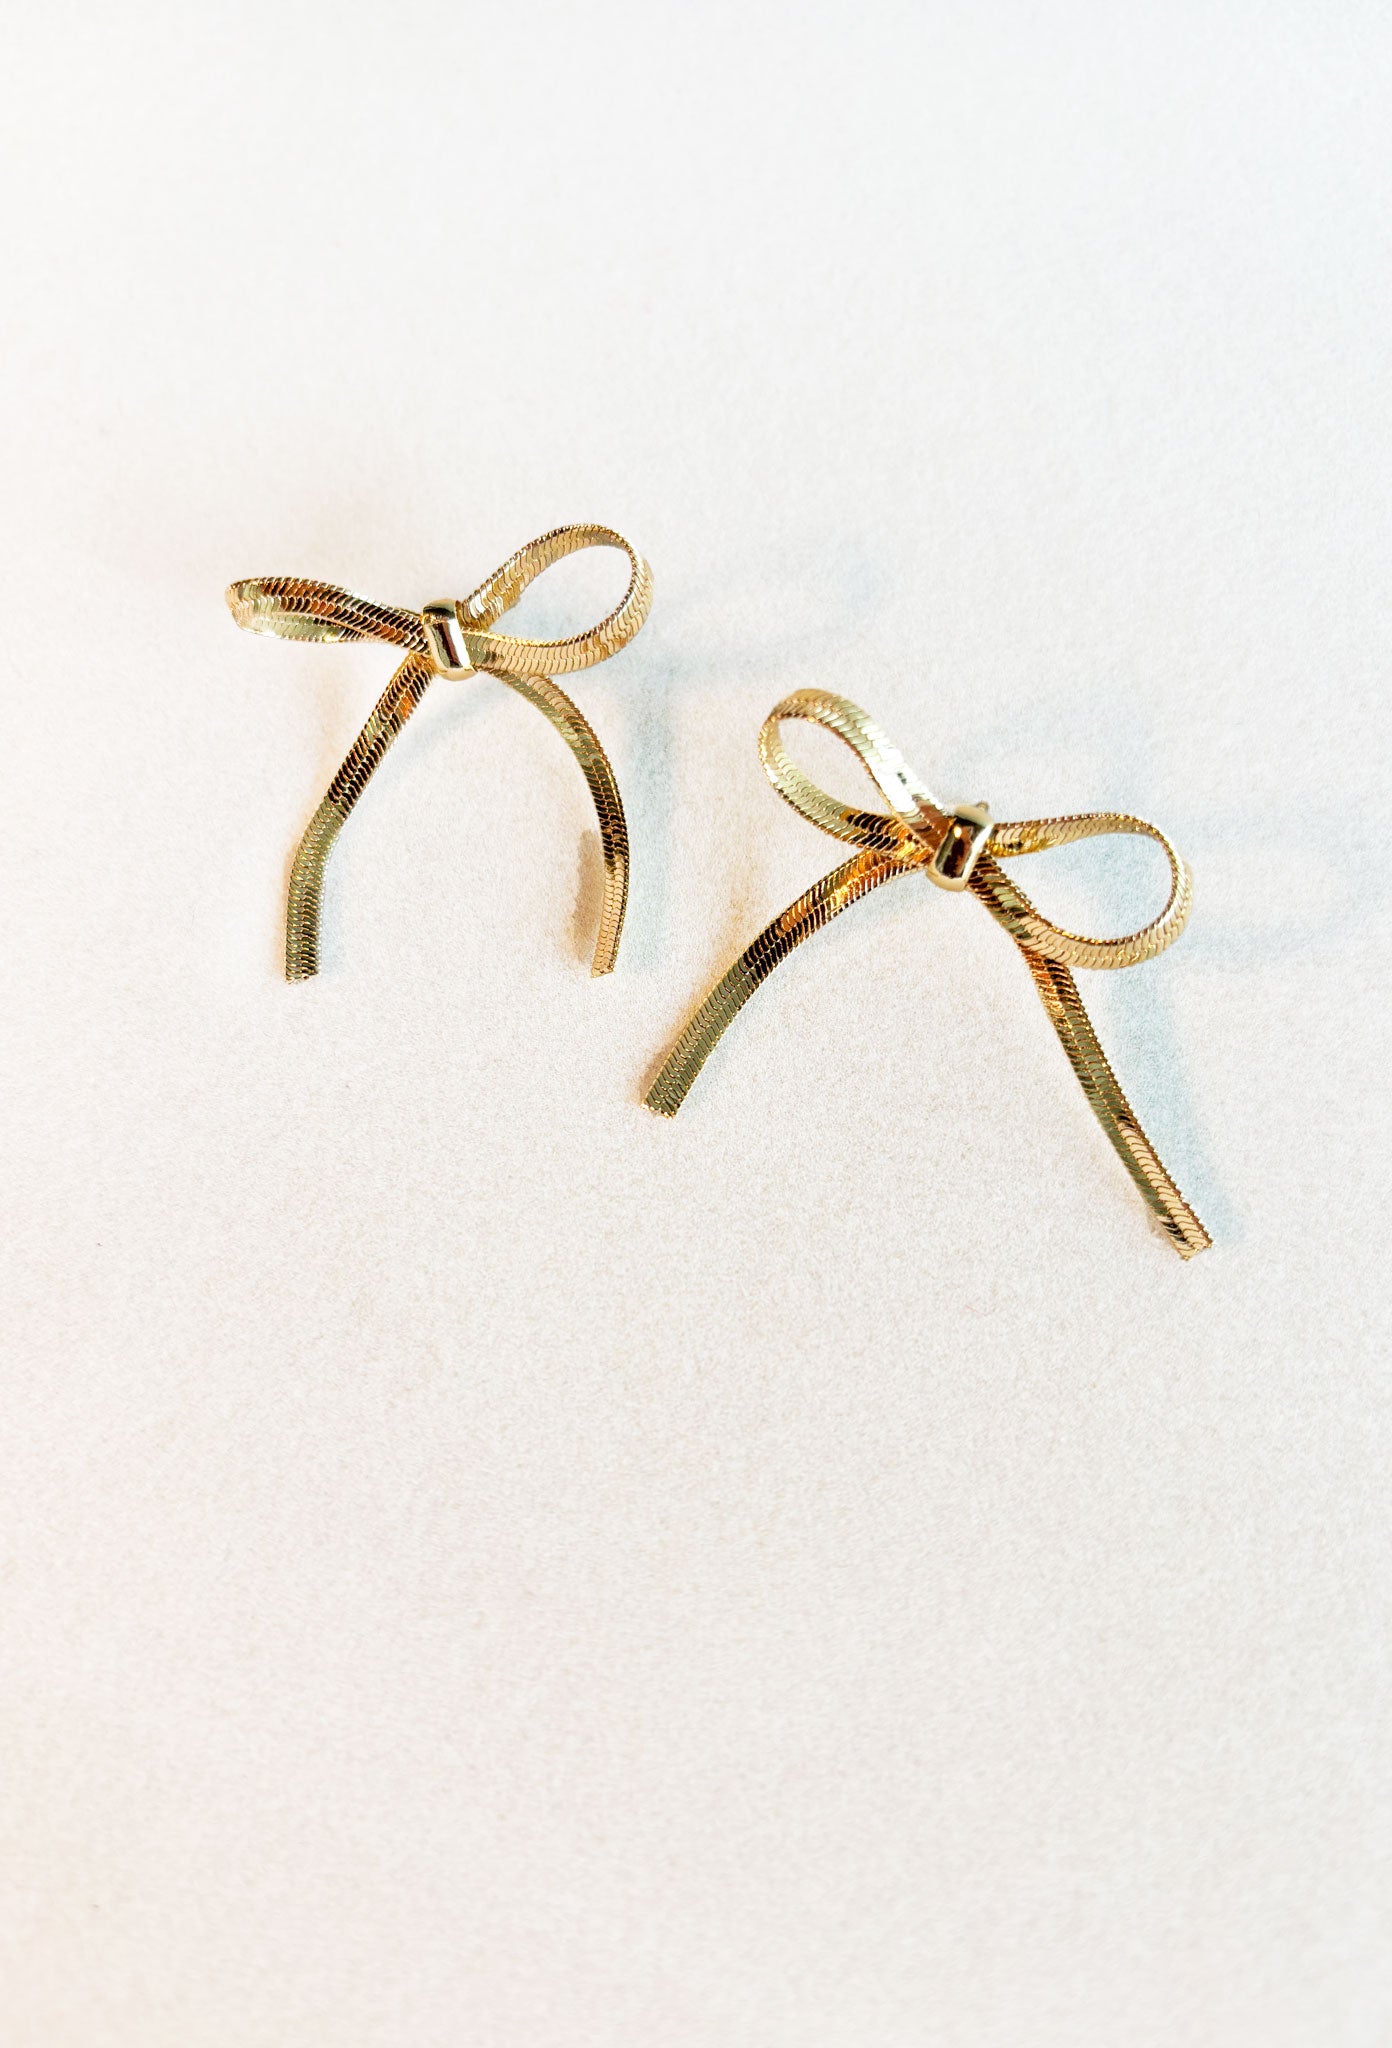 Bows & Kisses Earrings, gold bow post earrings 